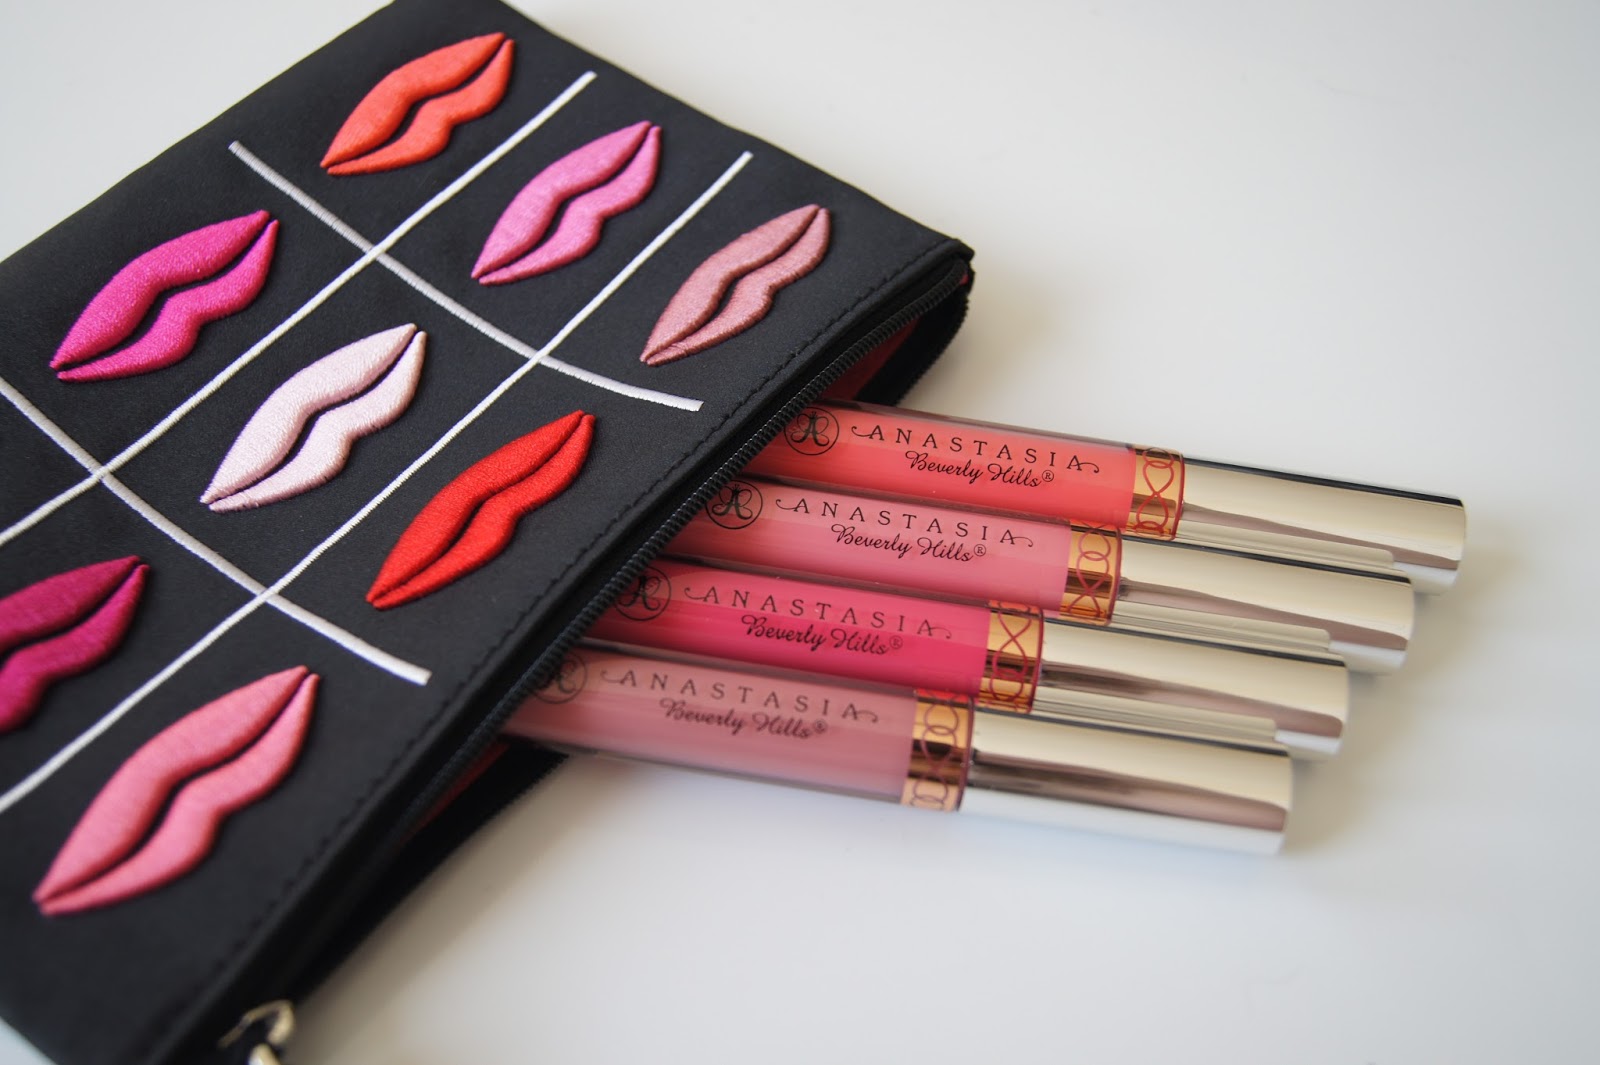 Anastasia Liquid Lipsticks-Lovely, Sweet Talk, Baby Pink and Retro Coral